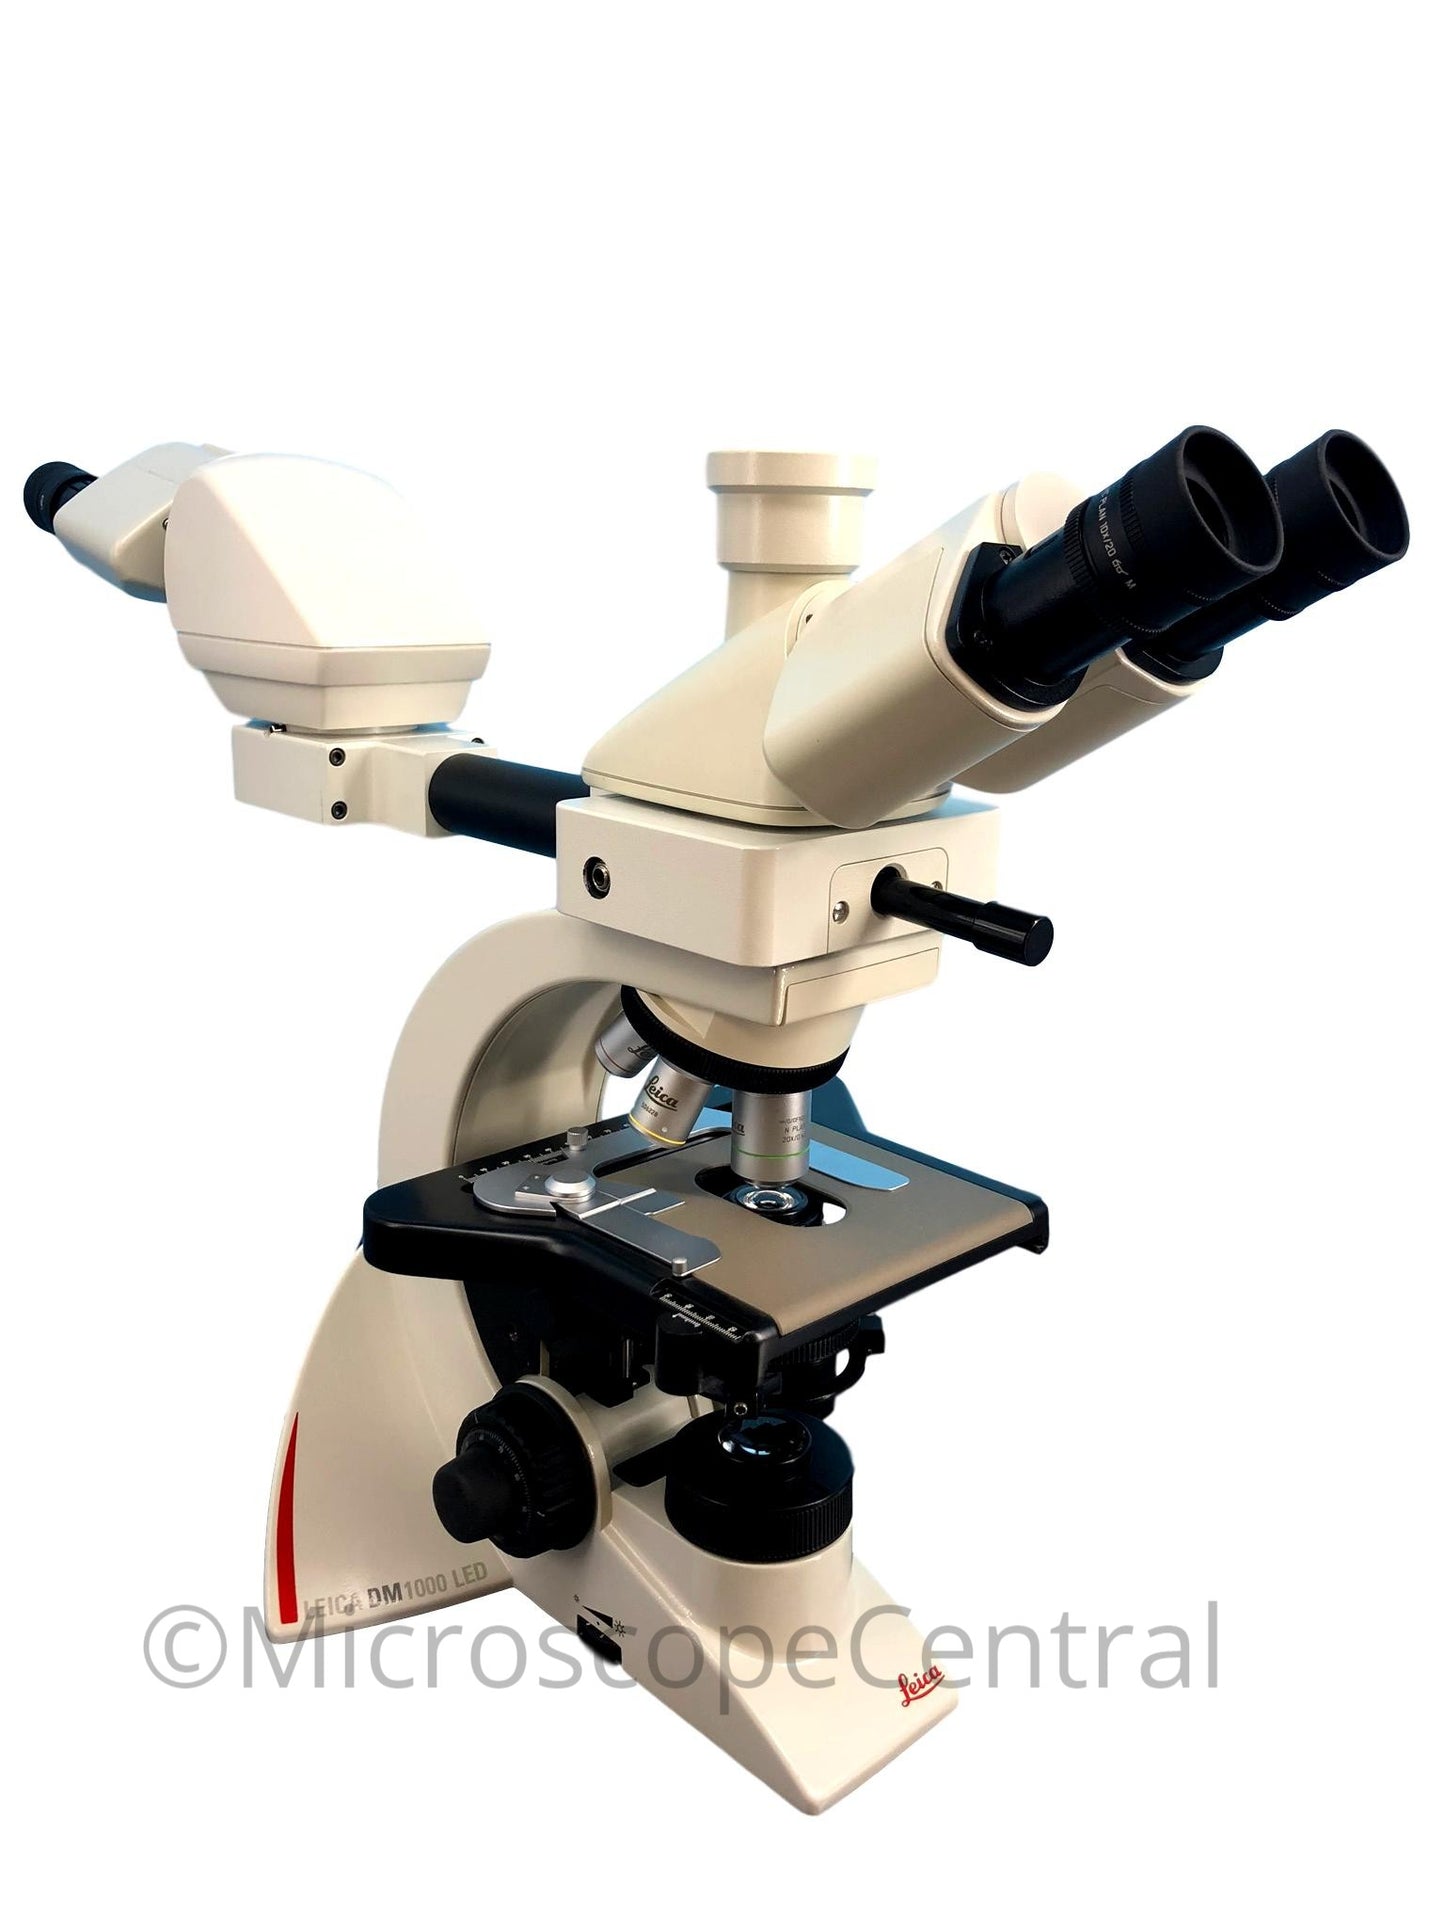 Leica DM Dual Microscope